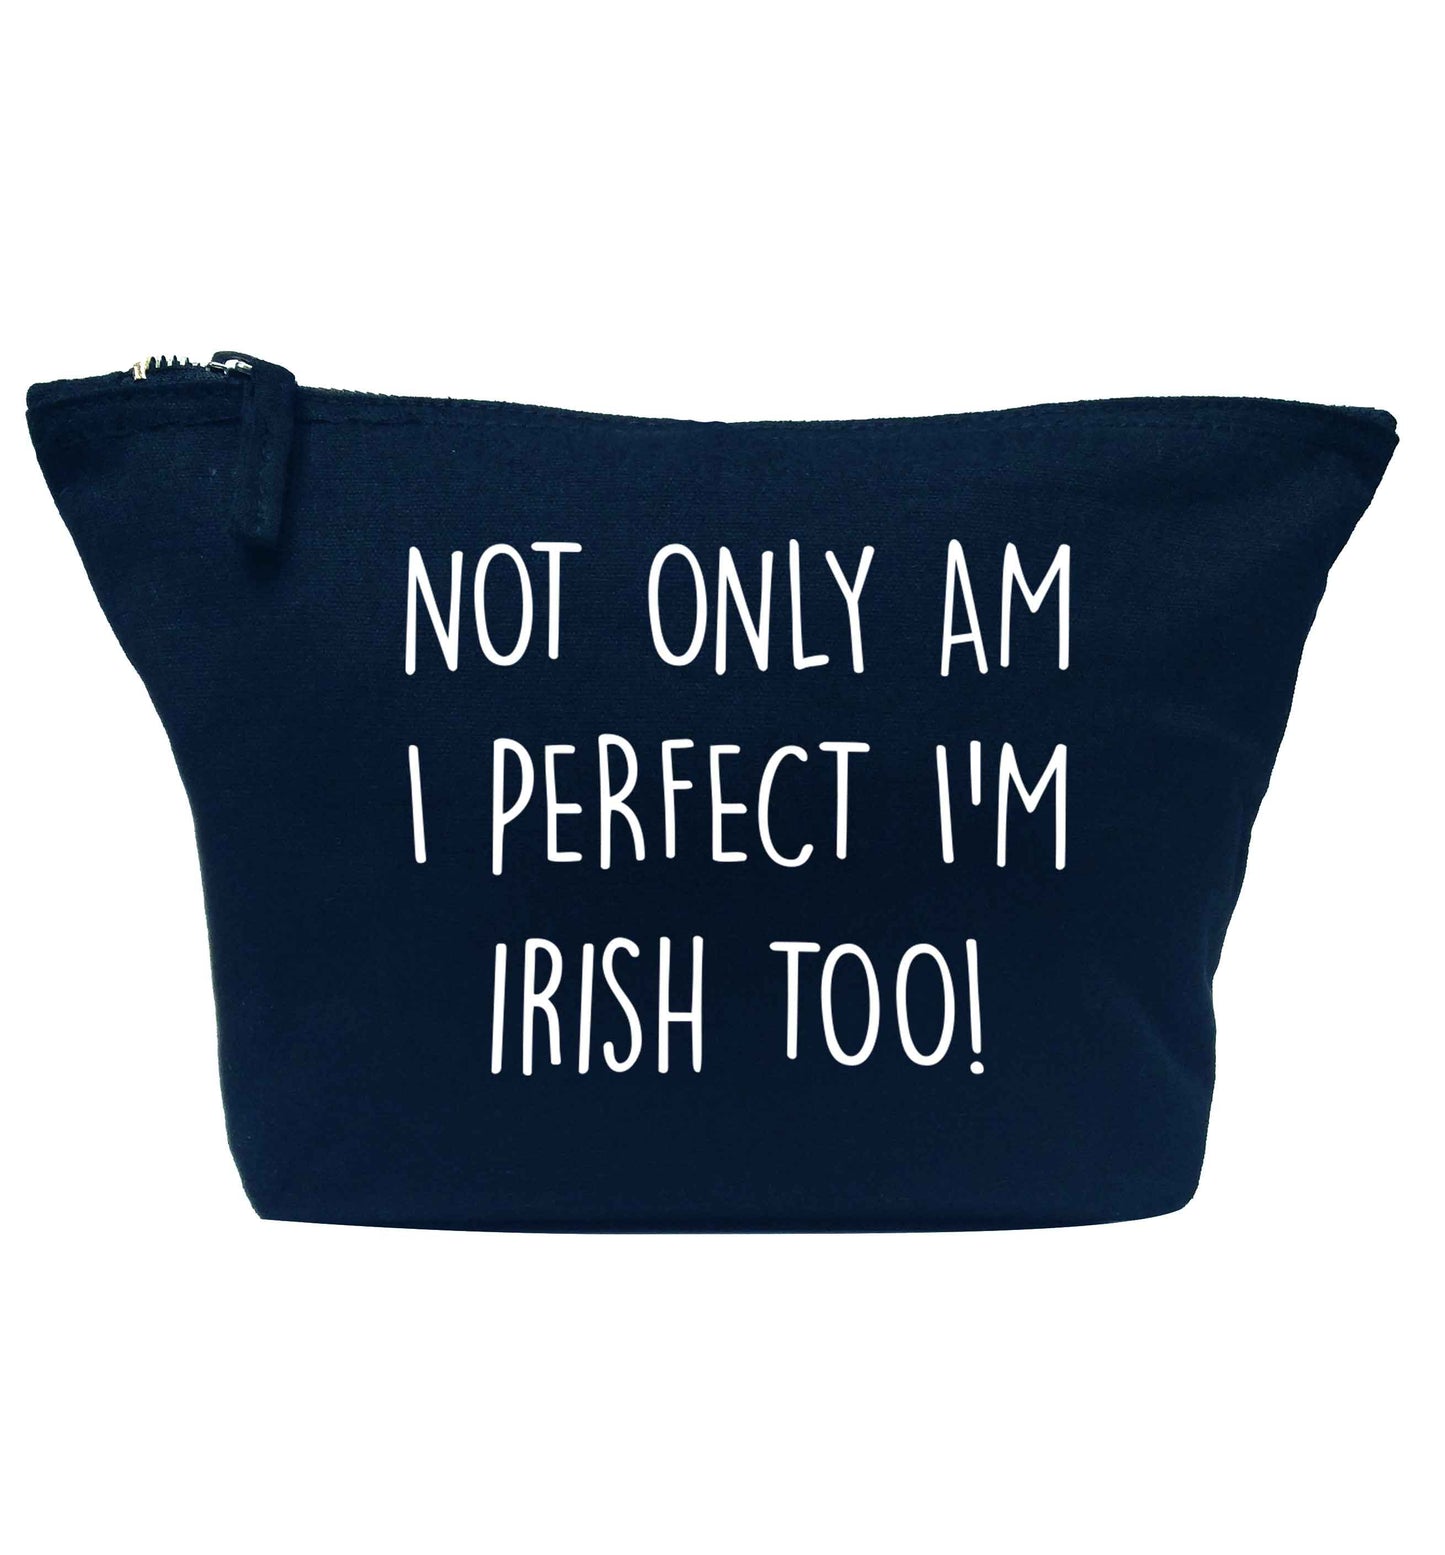 Not only am I perfect I'm Irish too! navy makeup bag